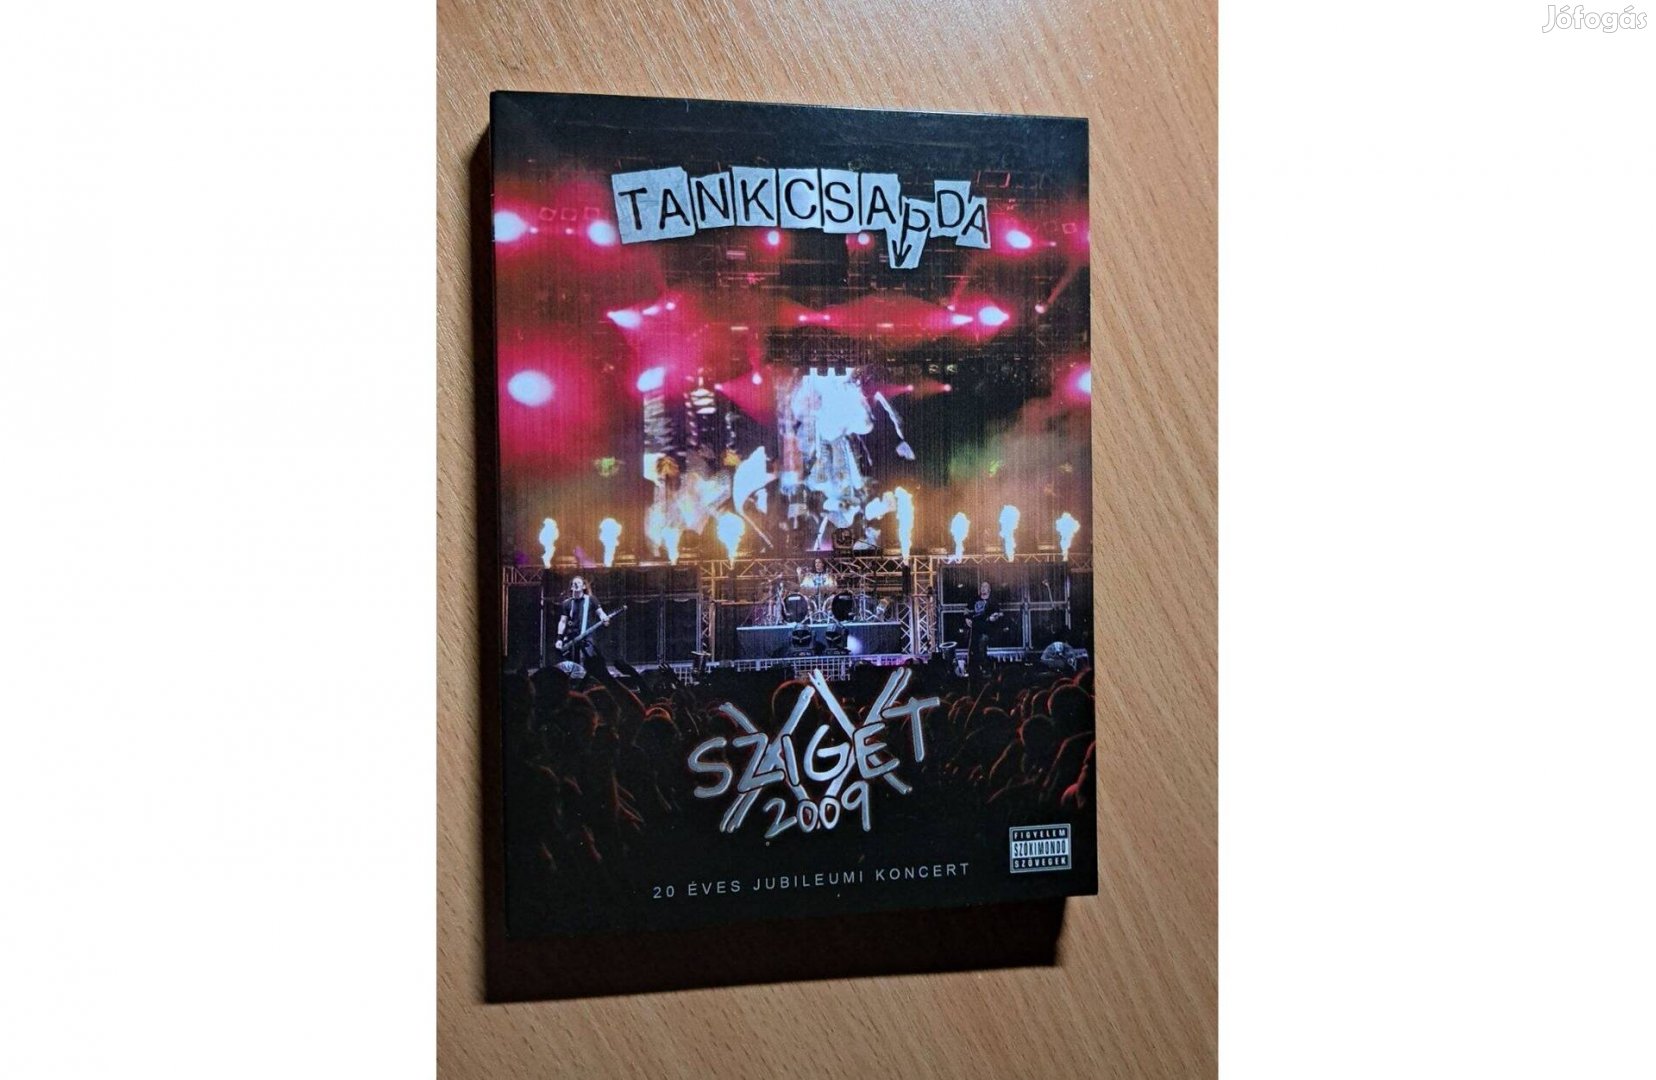 Tankcsapda - Sziget 2009 - dupla DVD